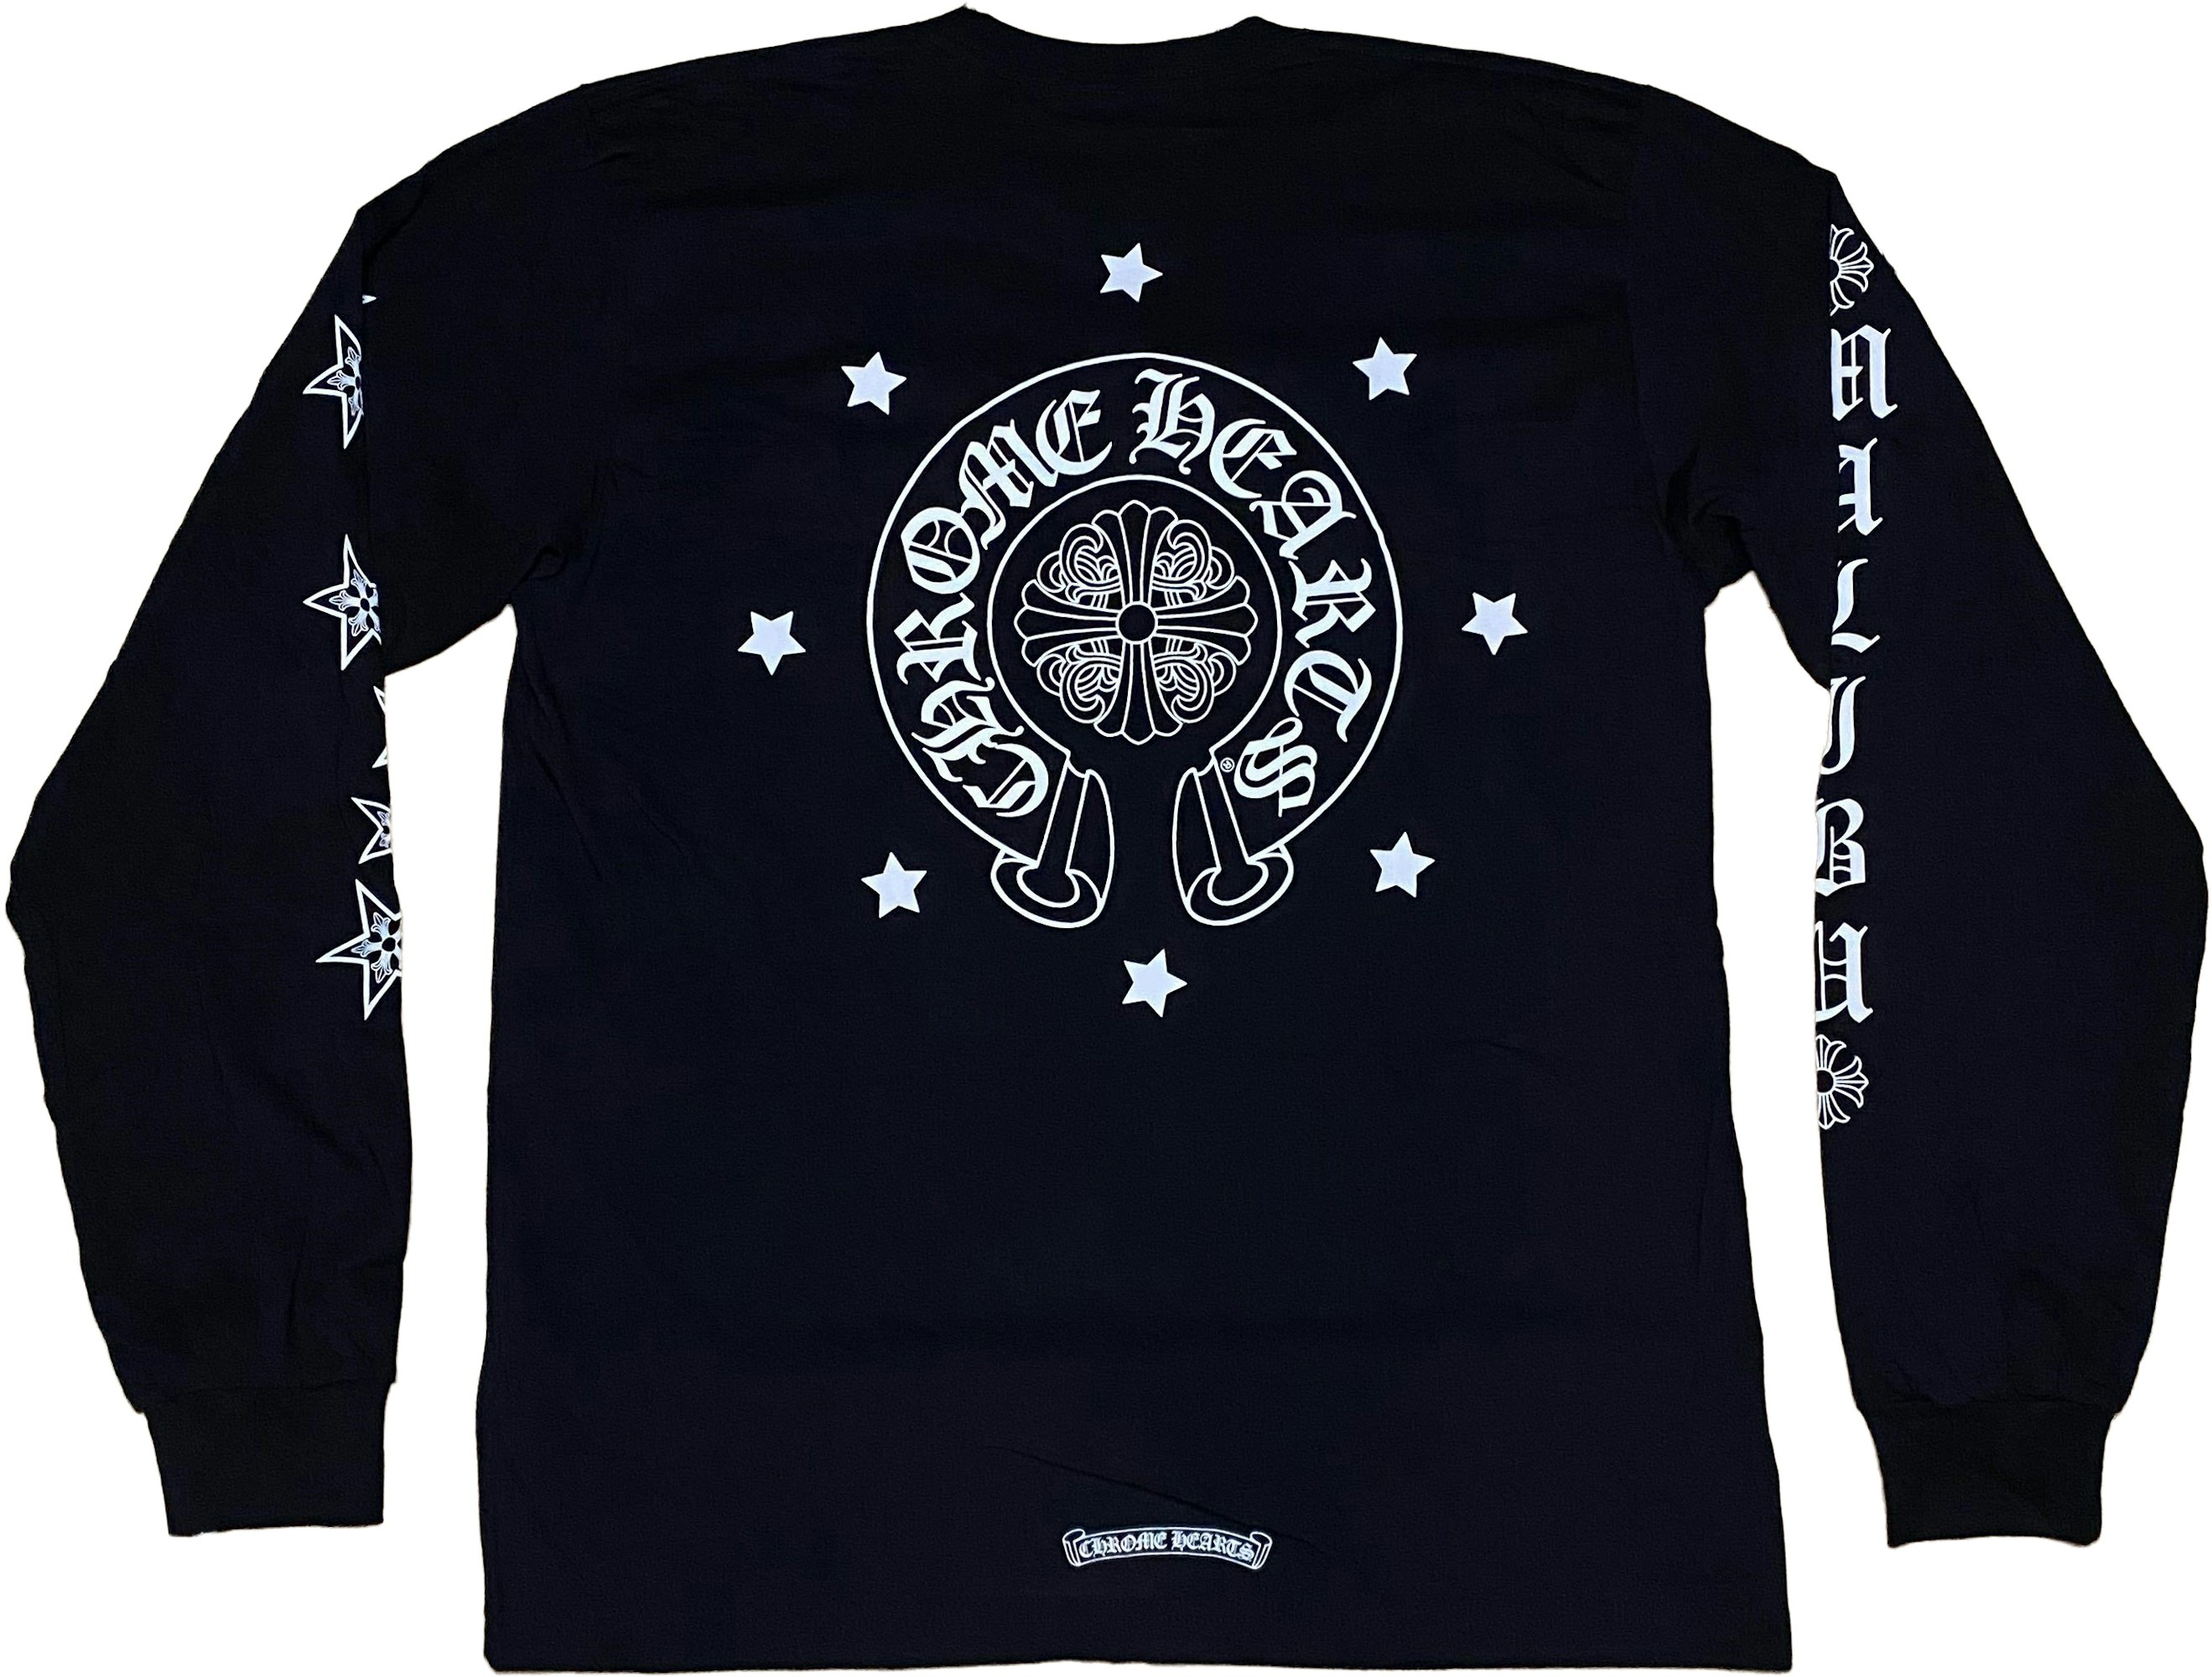 Chrome Hearts Malibu Exclusive Stars L/S T-Shirt Black